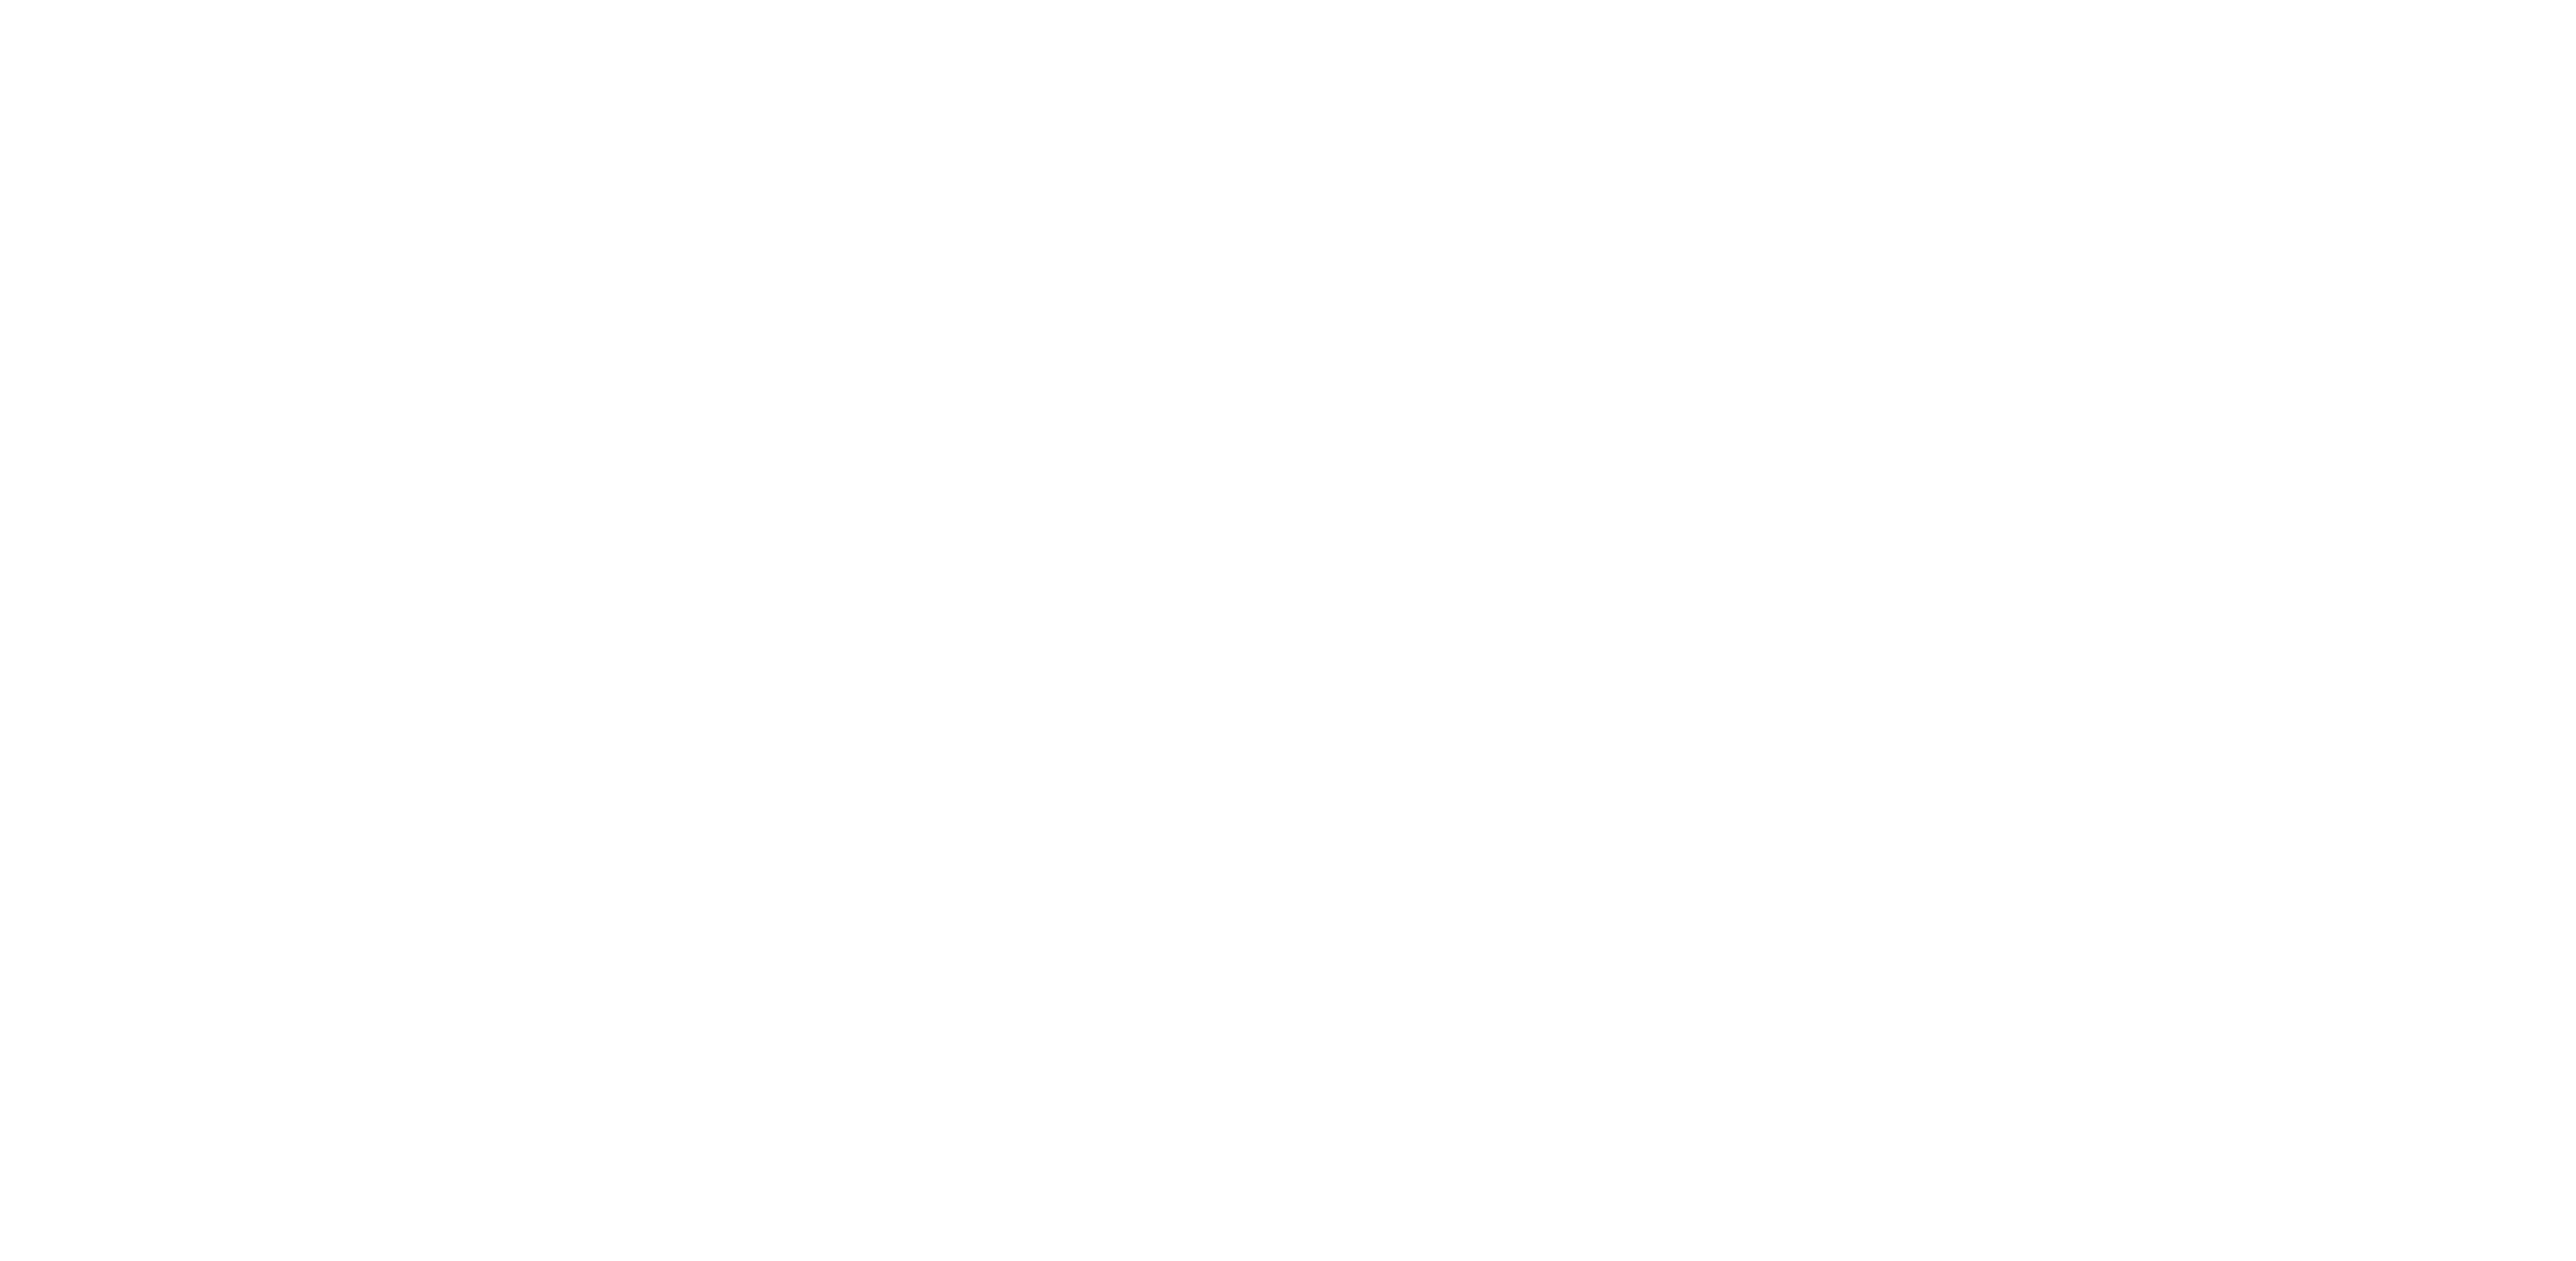 Merge all Meridians